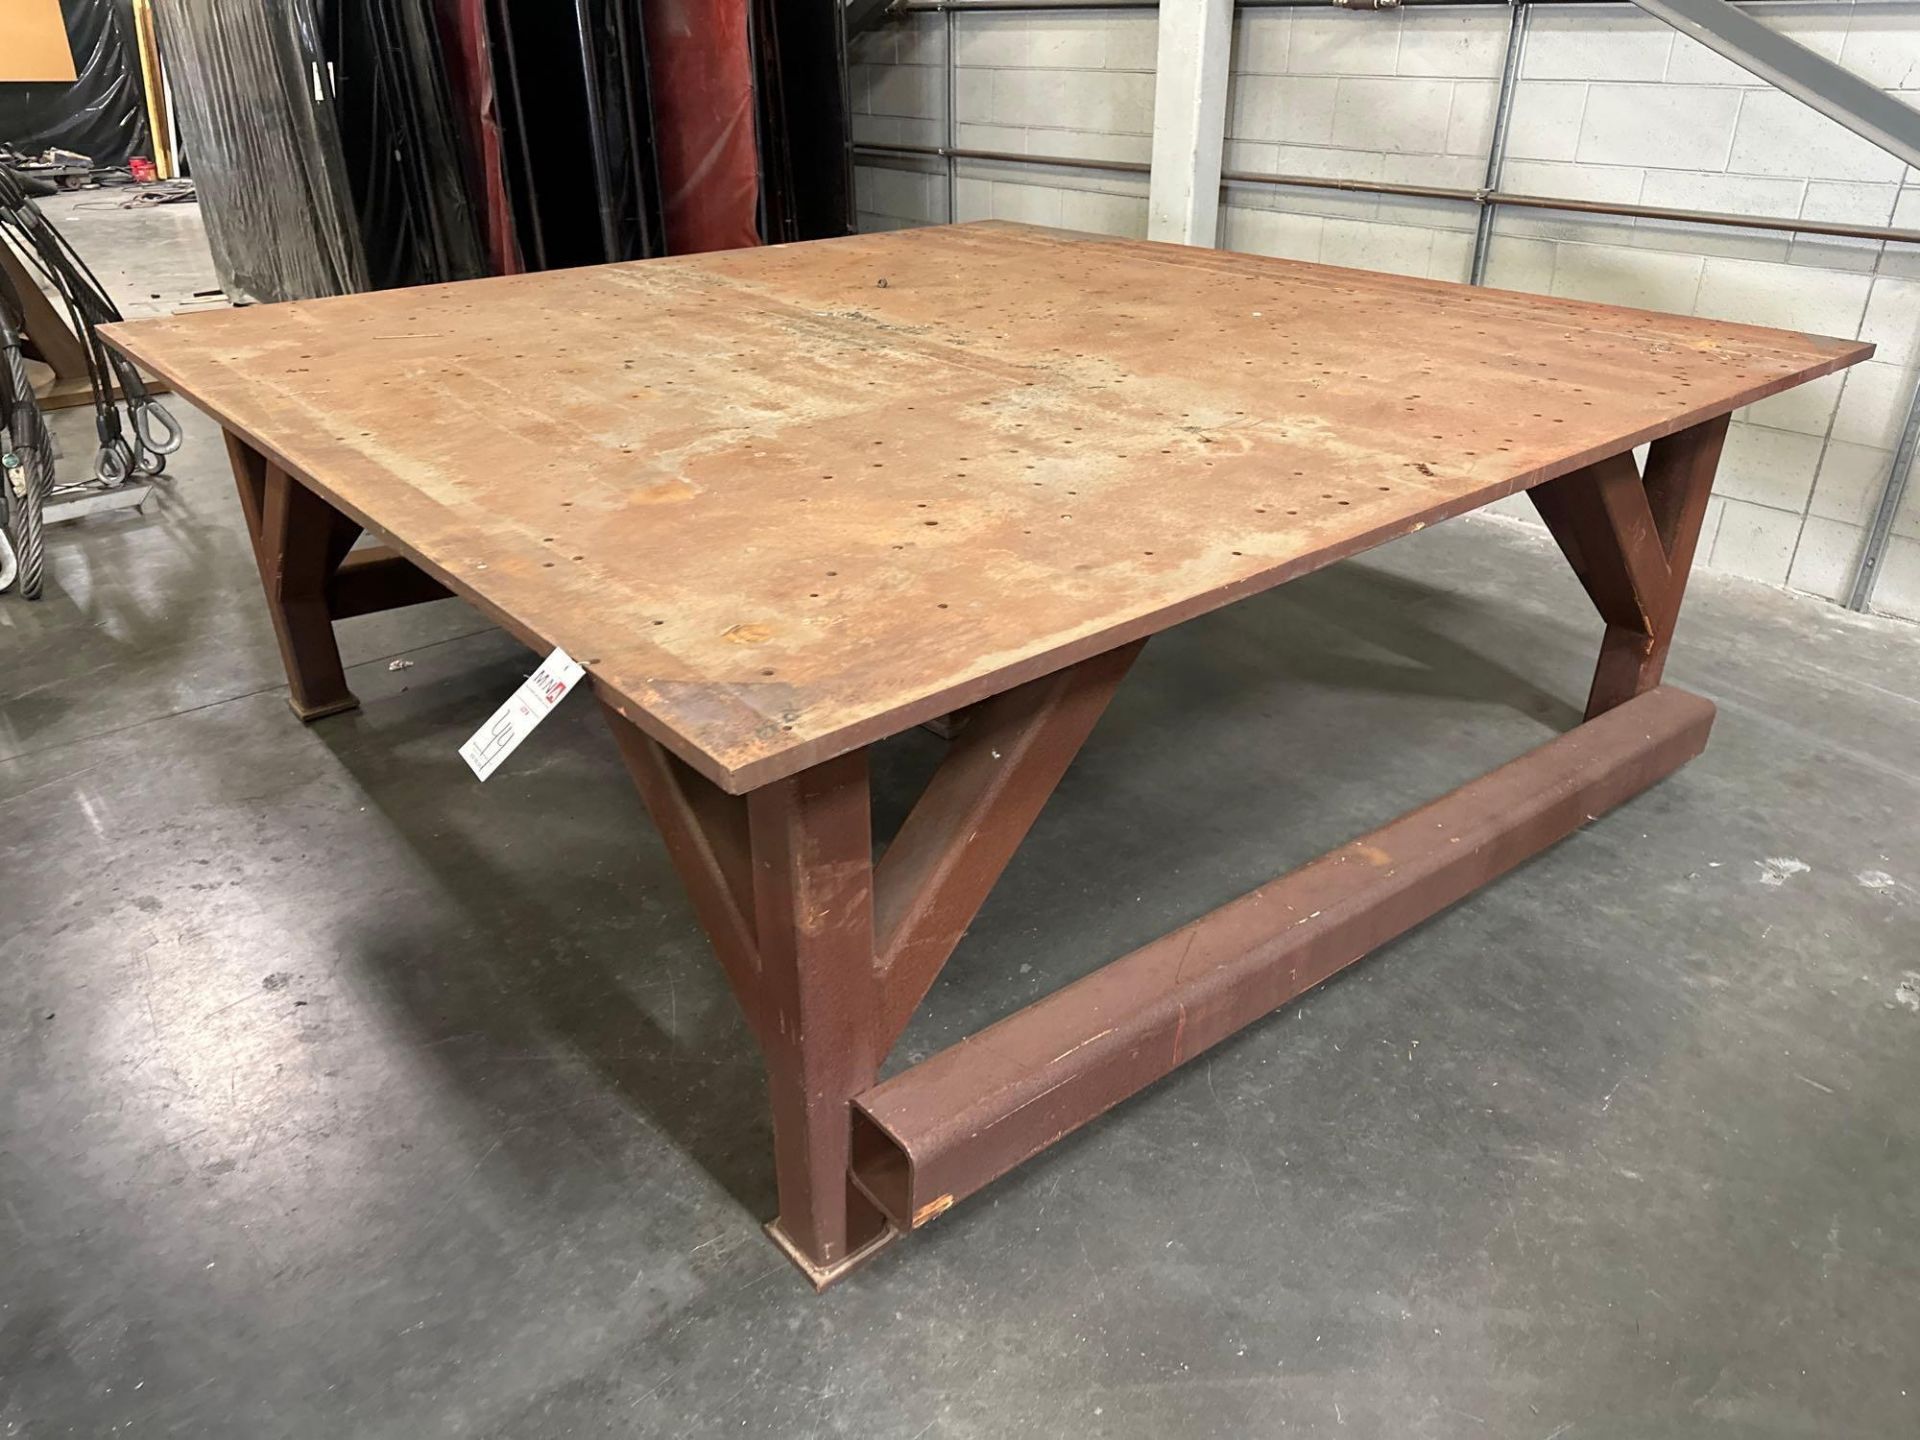 96”L x 96”W x 34”H Steel Welding Table - Image 2 of 4